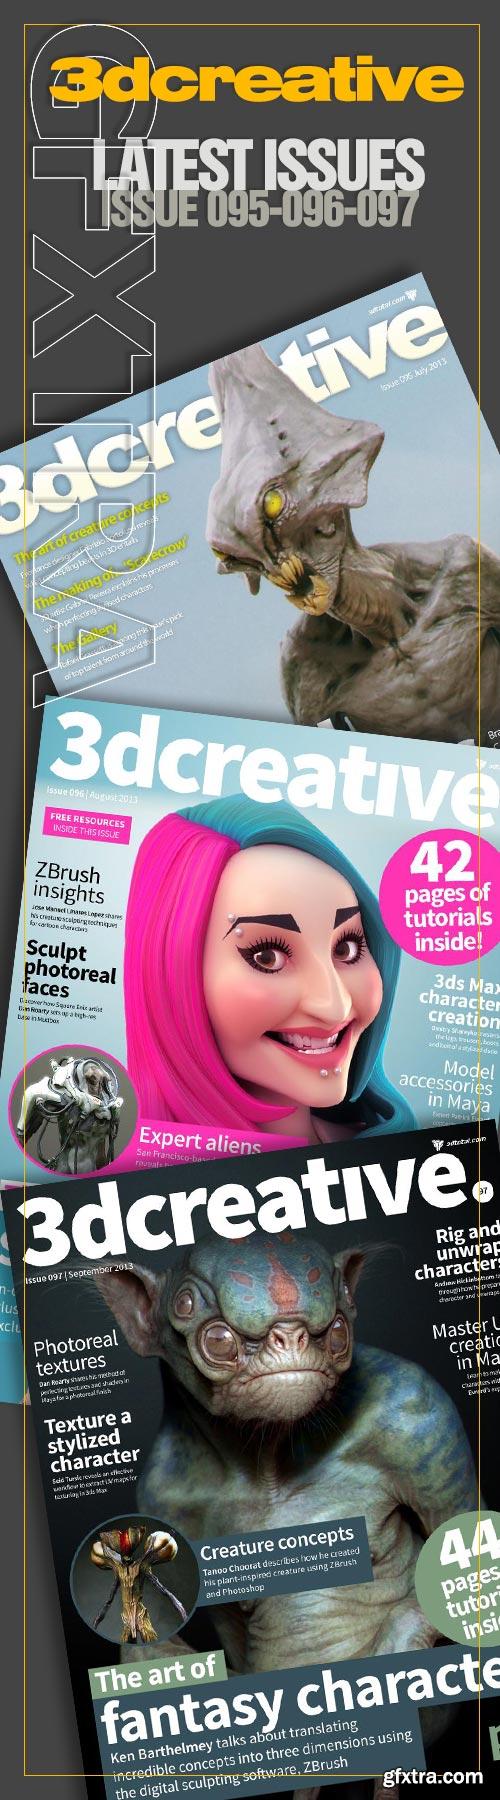 3DCreative - Latest Magazine Issues 095-096-097